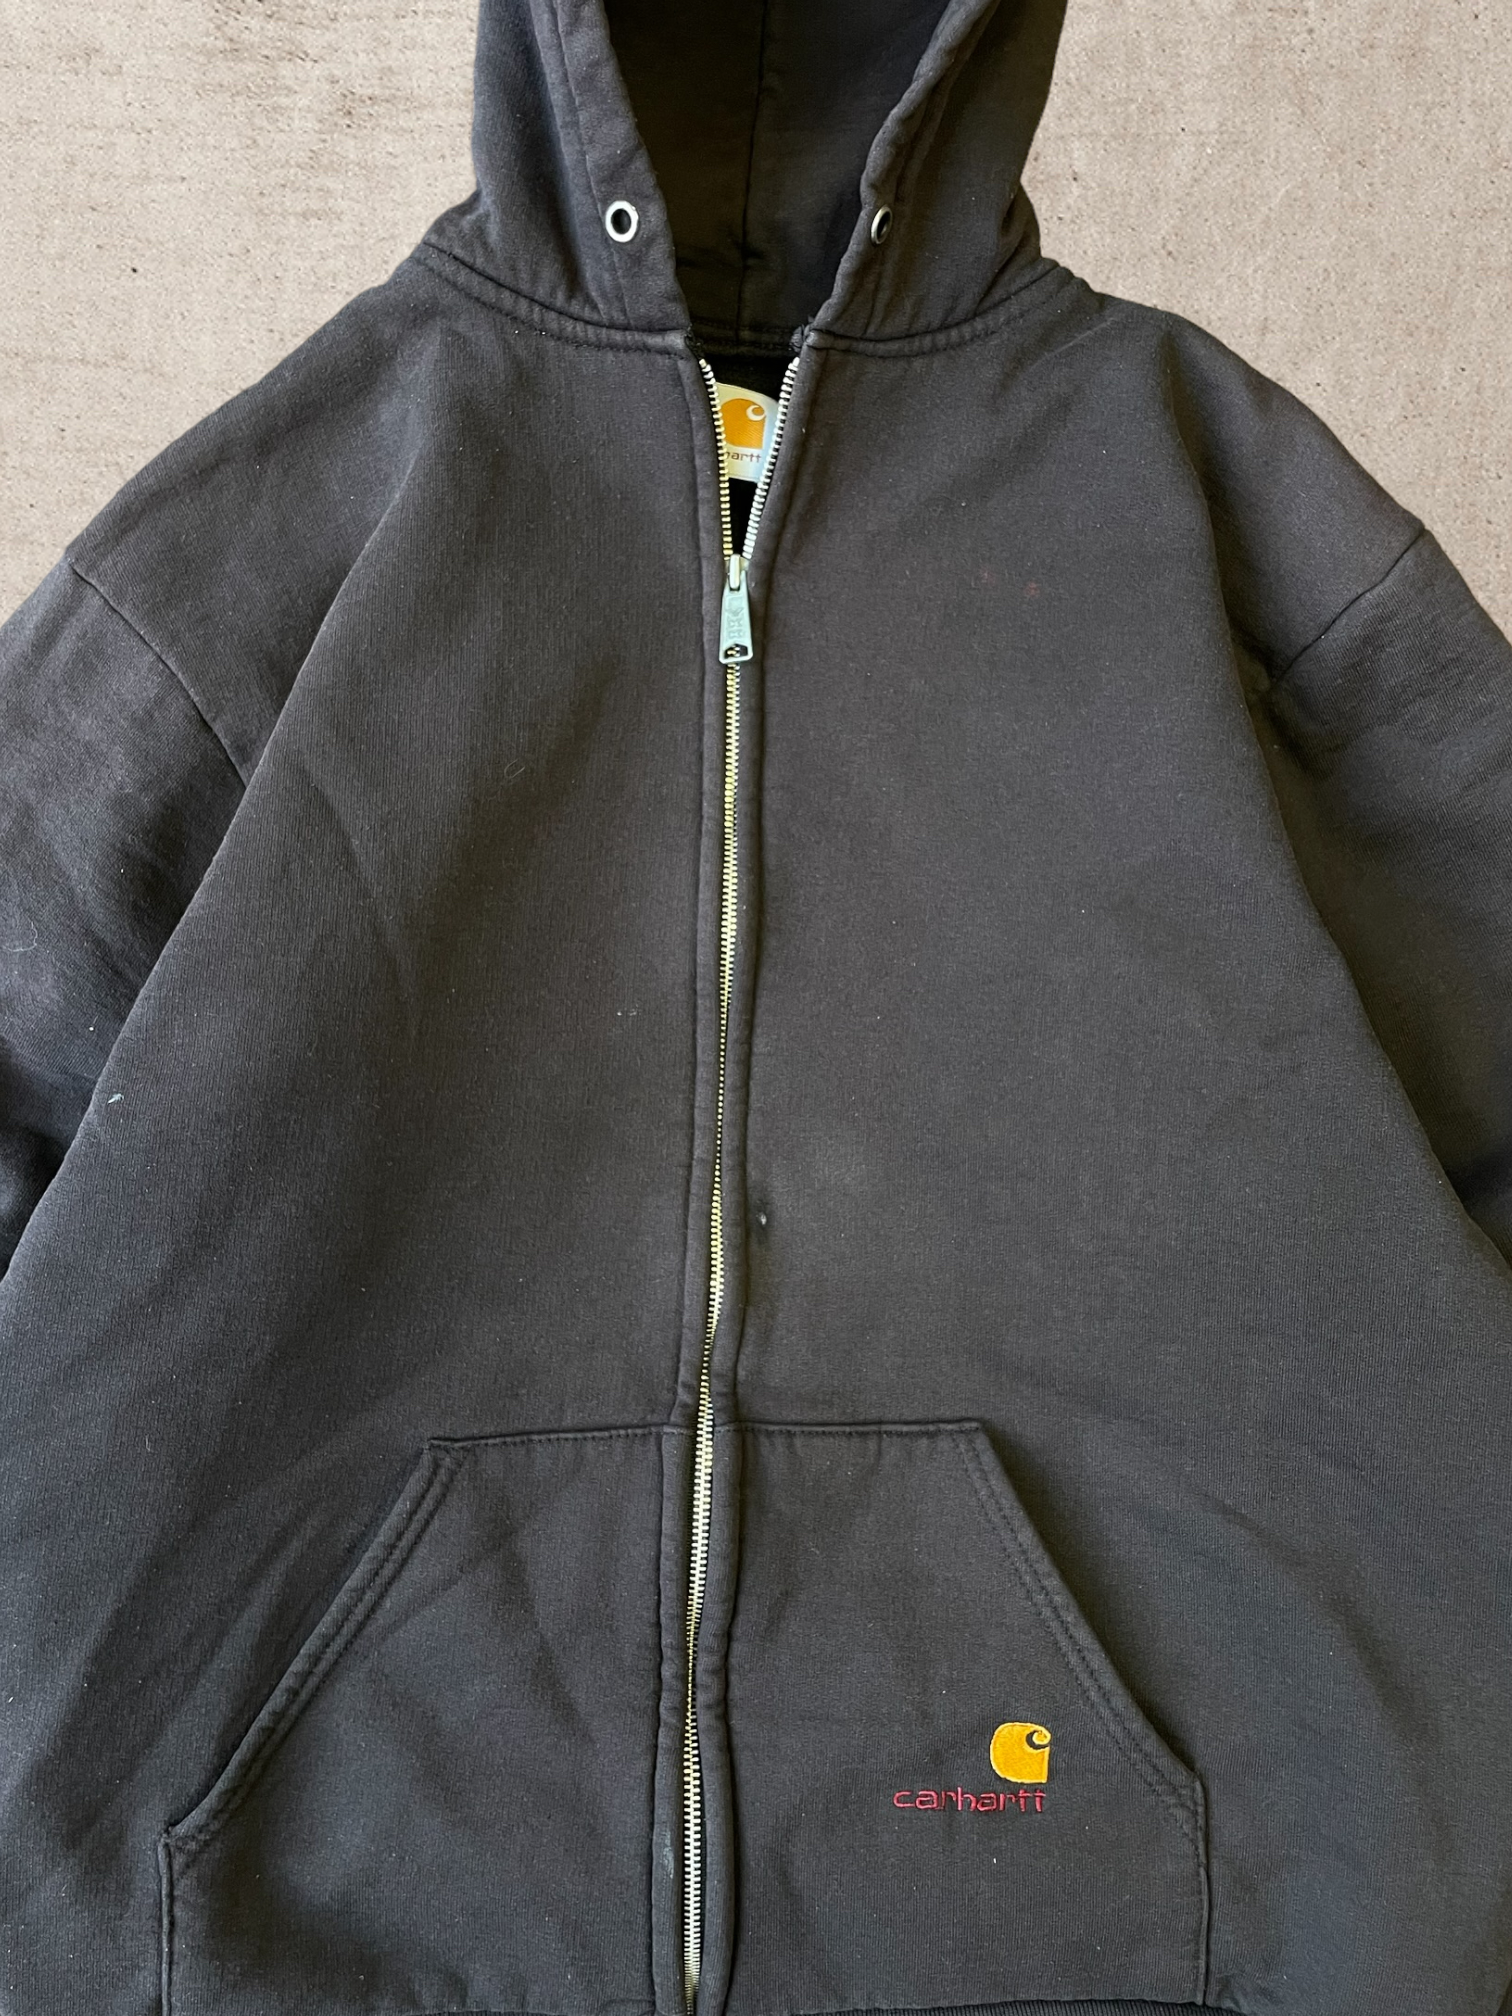 90s Carhartt Thermal Lined Zip up Sweatshirt - X-Large